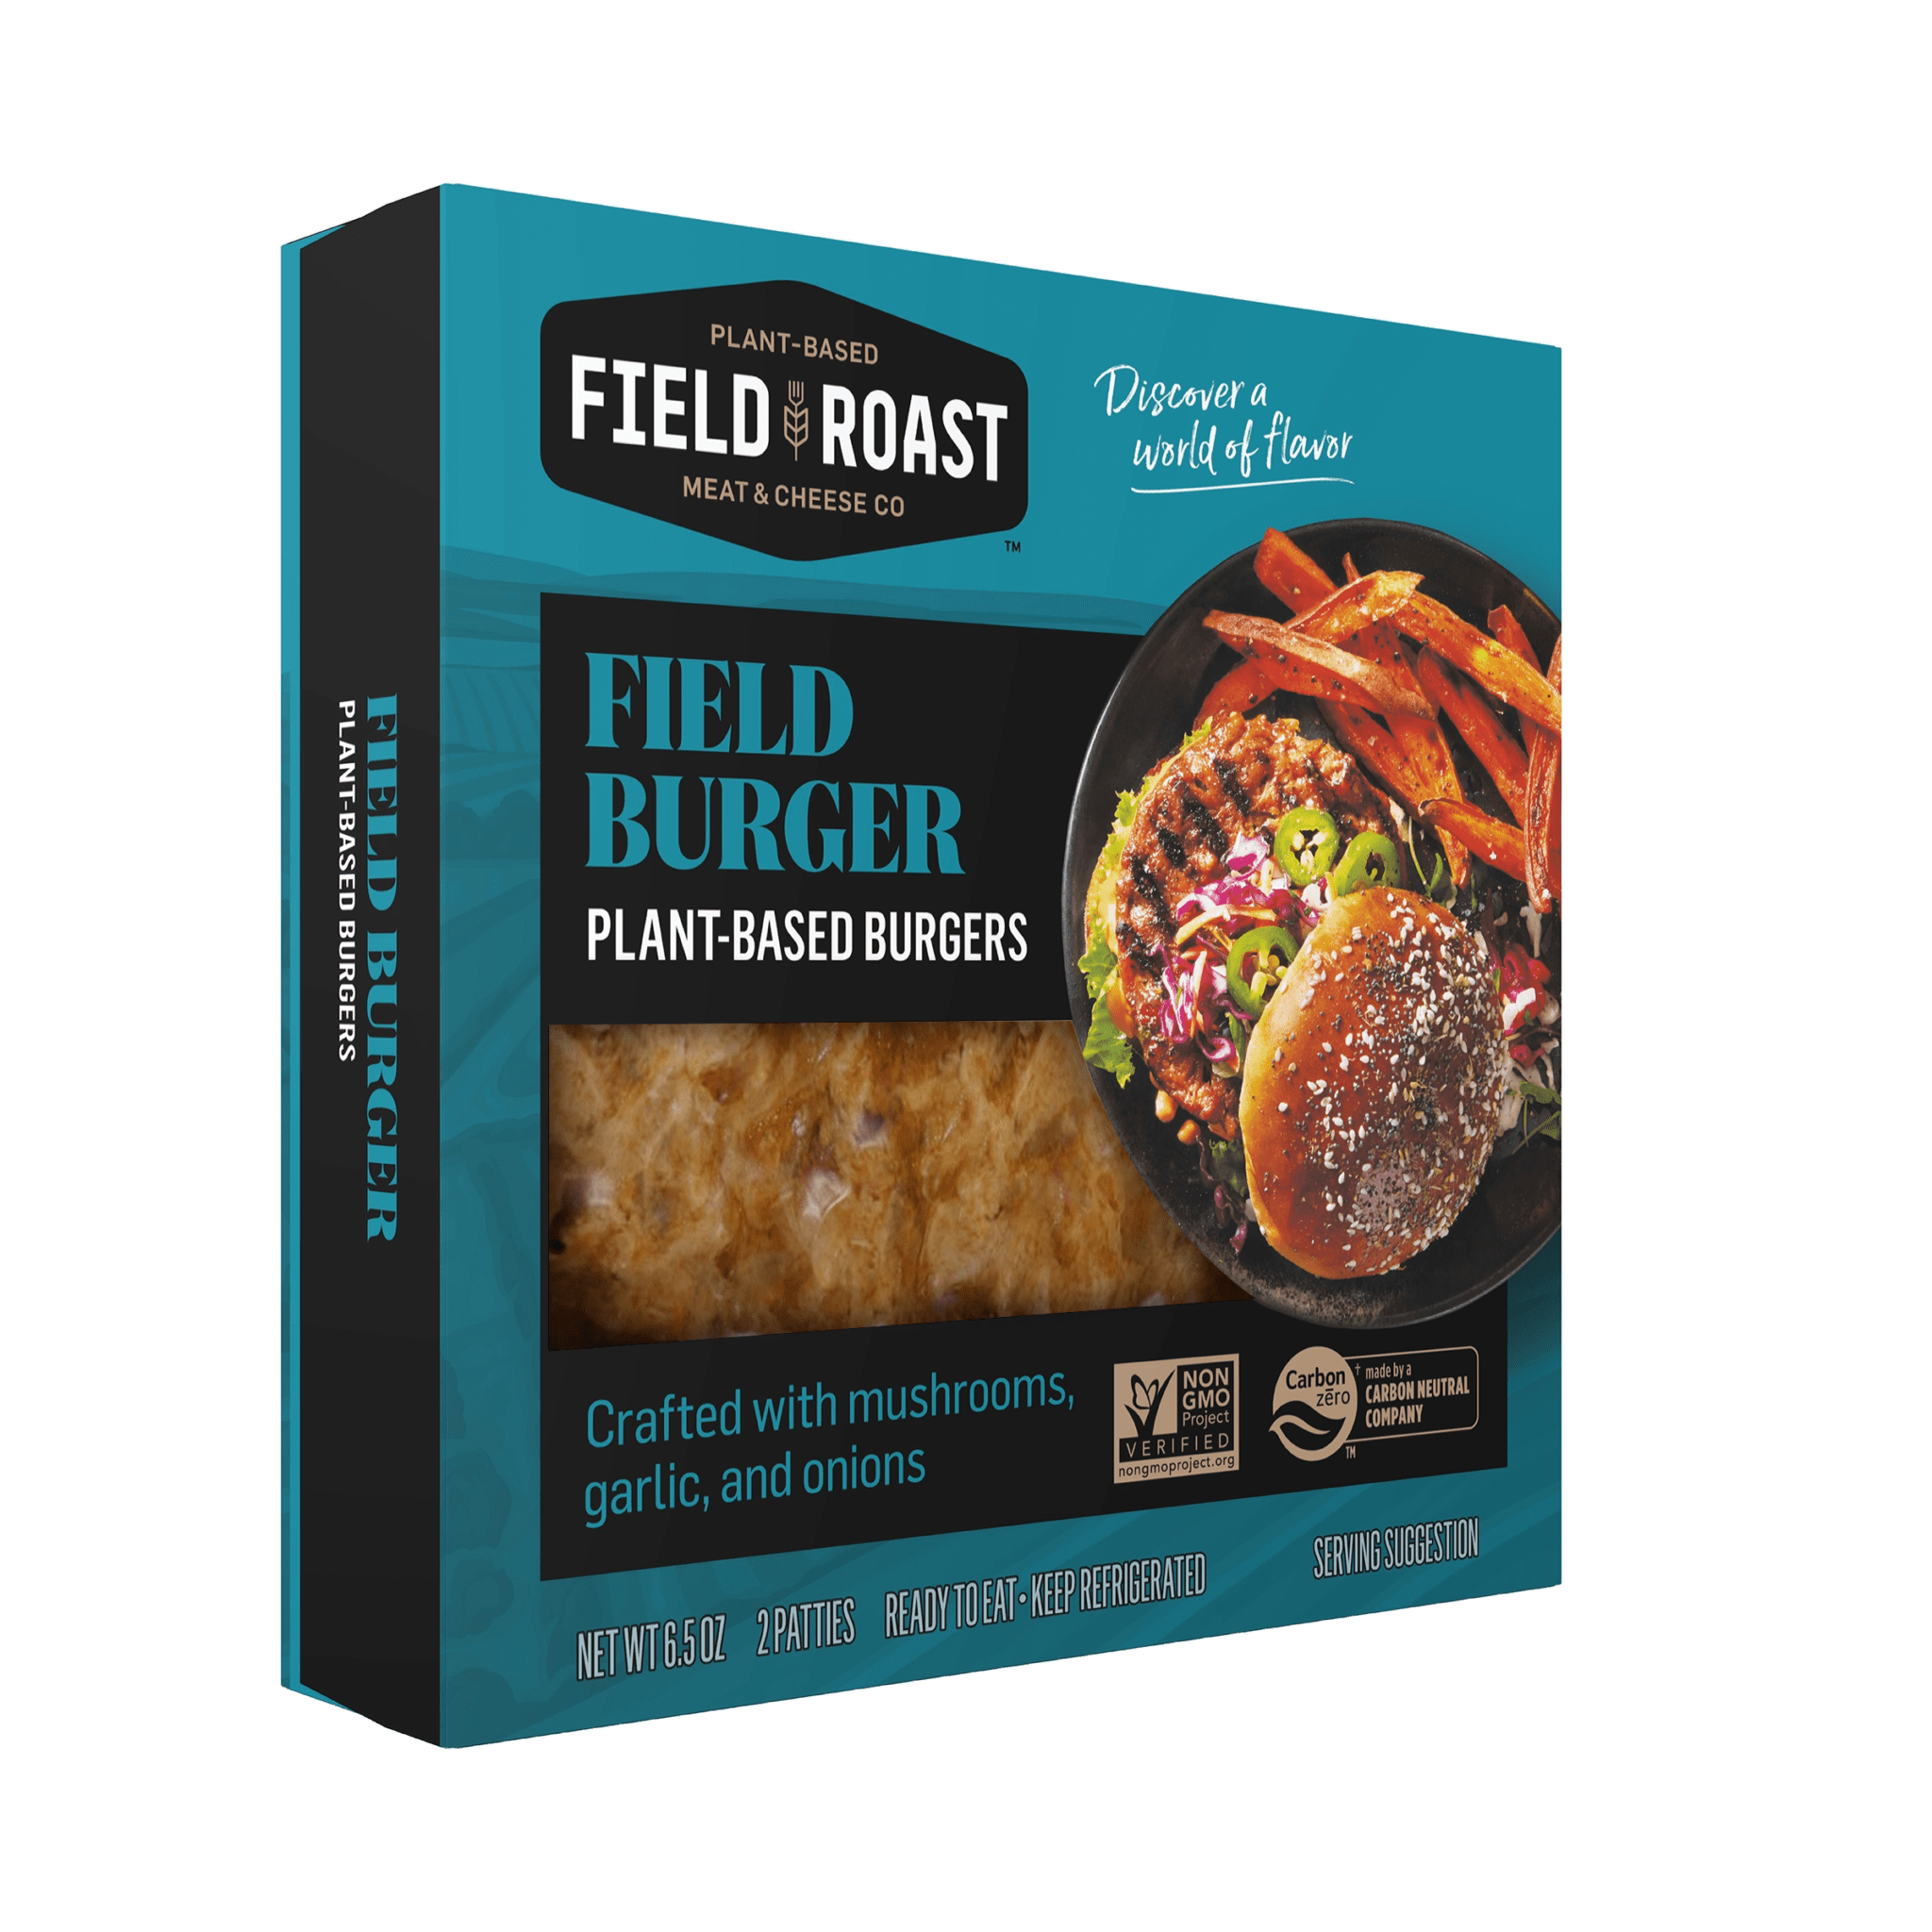 Field Burger